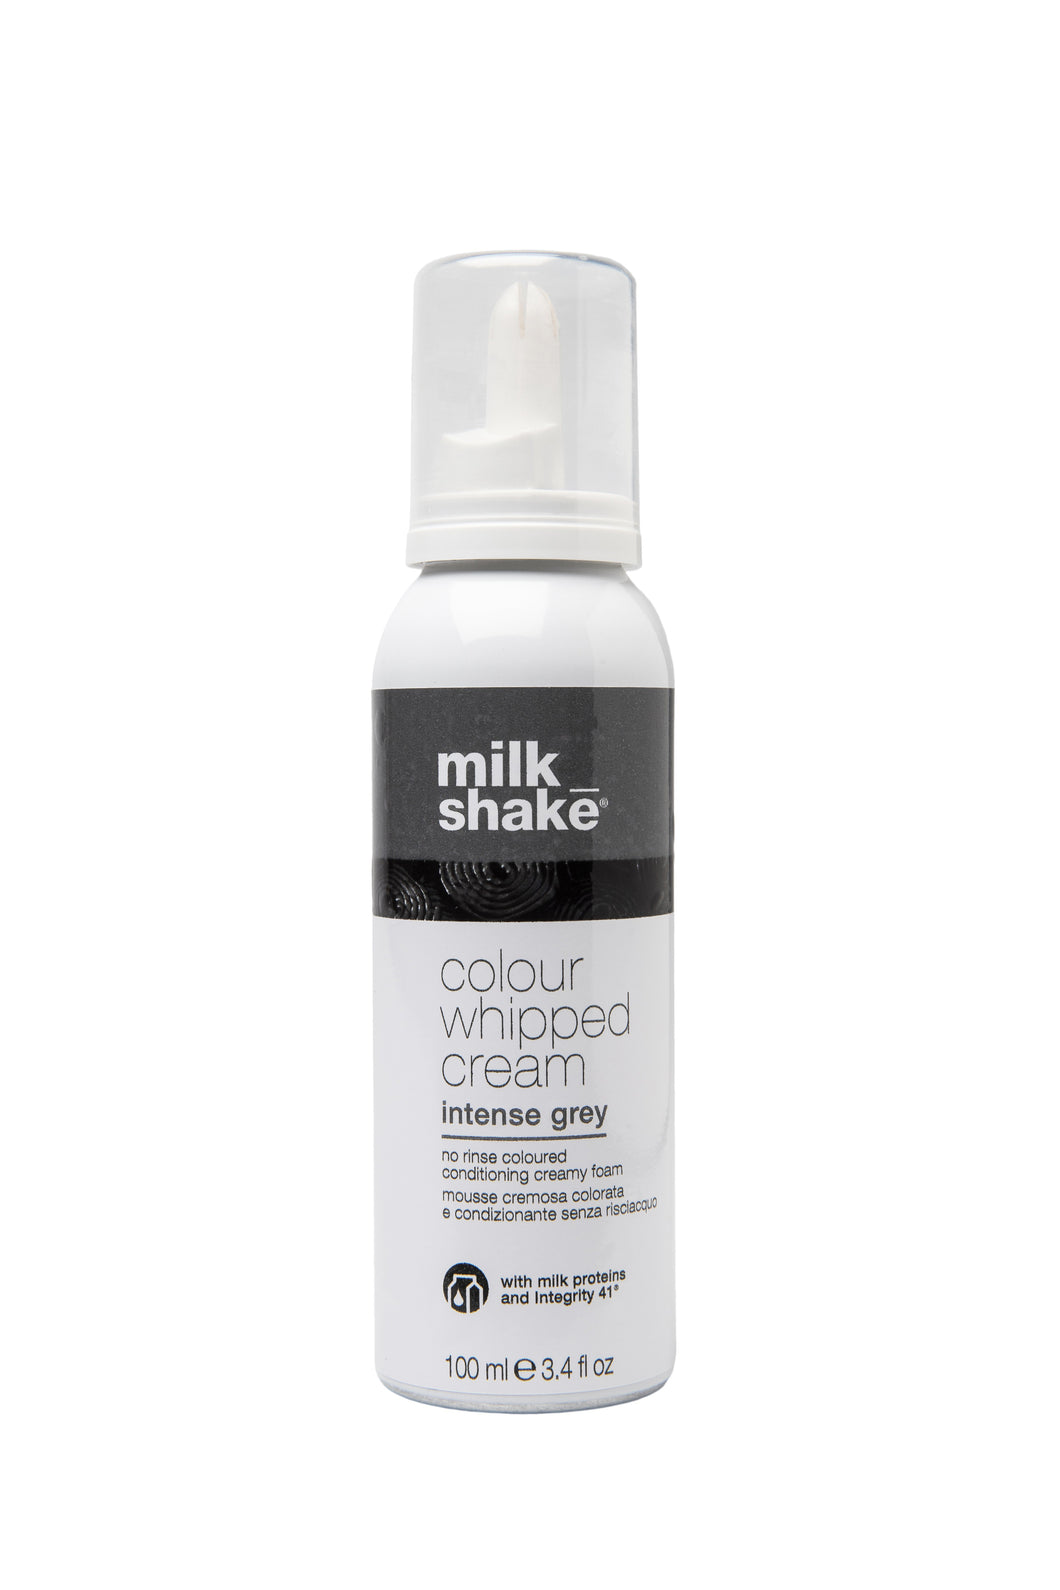 milk_shake colour whipped cream intense grey